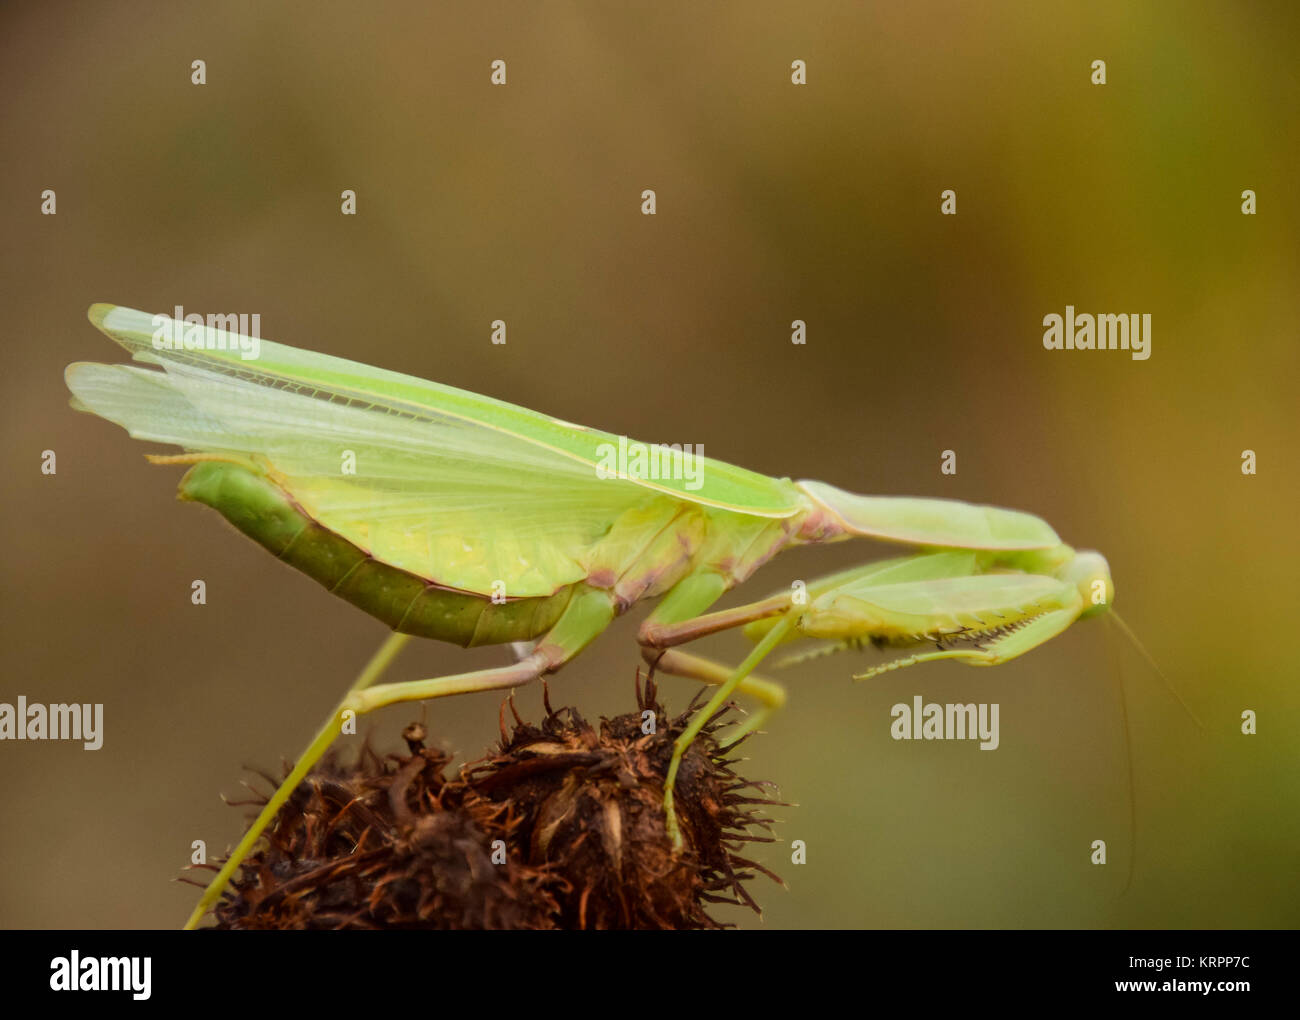 Mantis on the tong. Mating mantises. Mantis insect predator. Stock Photo